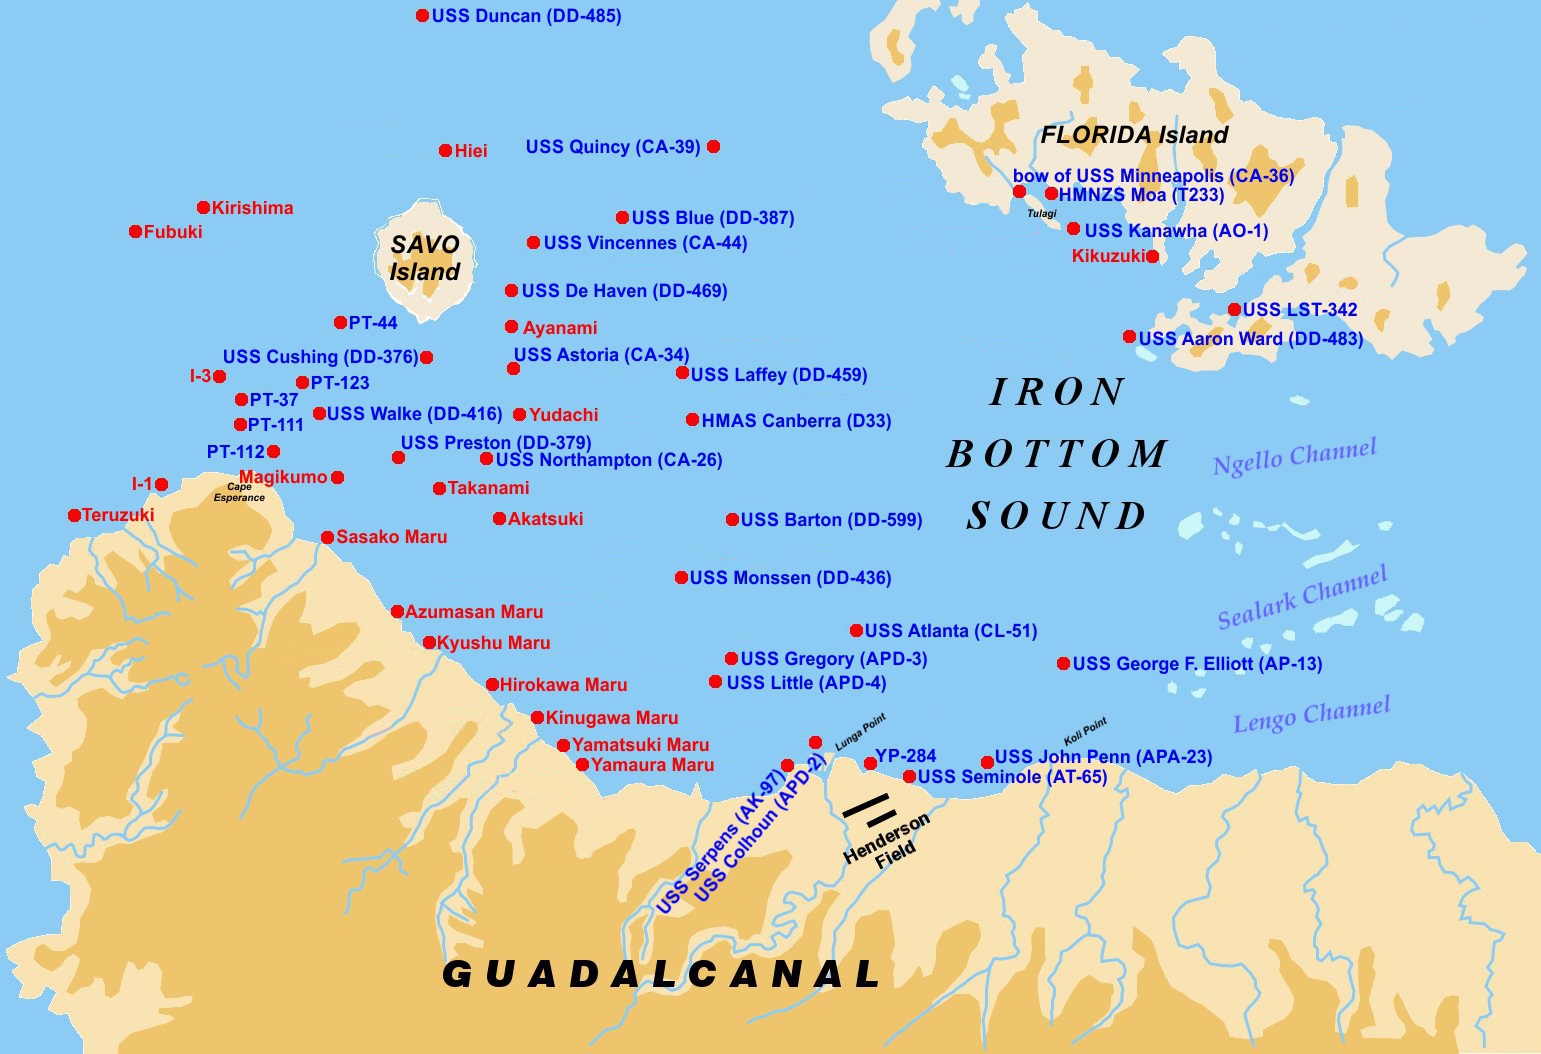 Solomon Islands Ironbottom Sound Shipwreck map